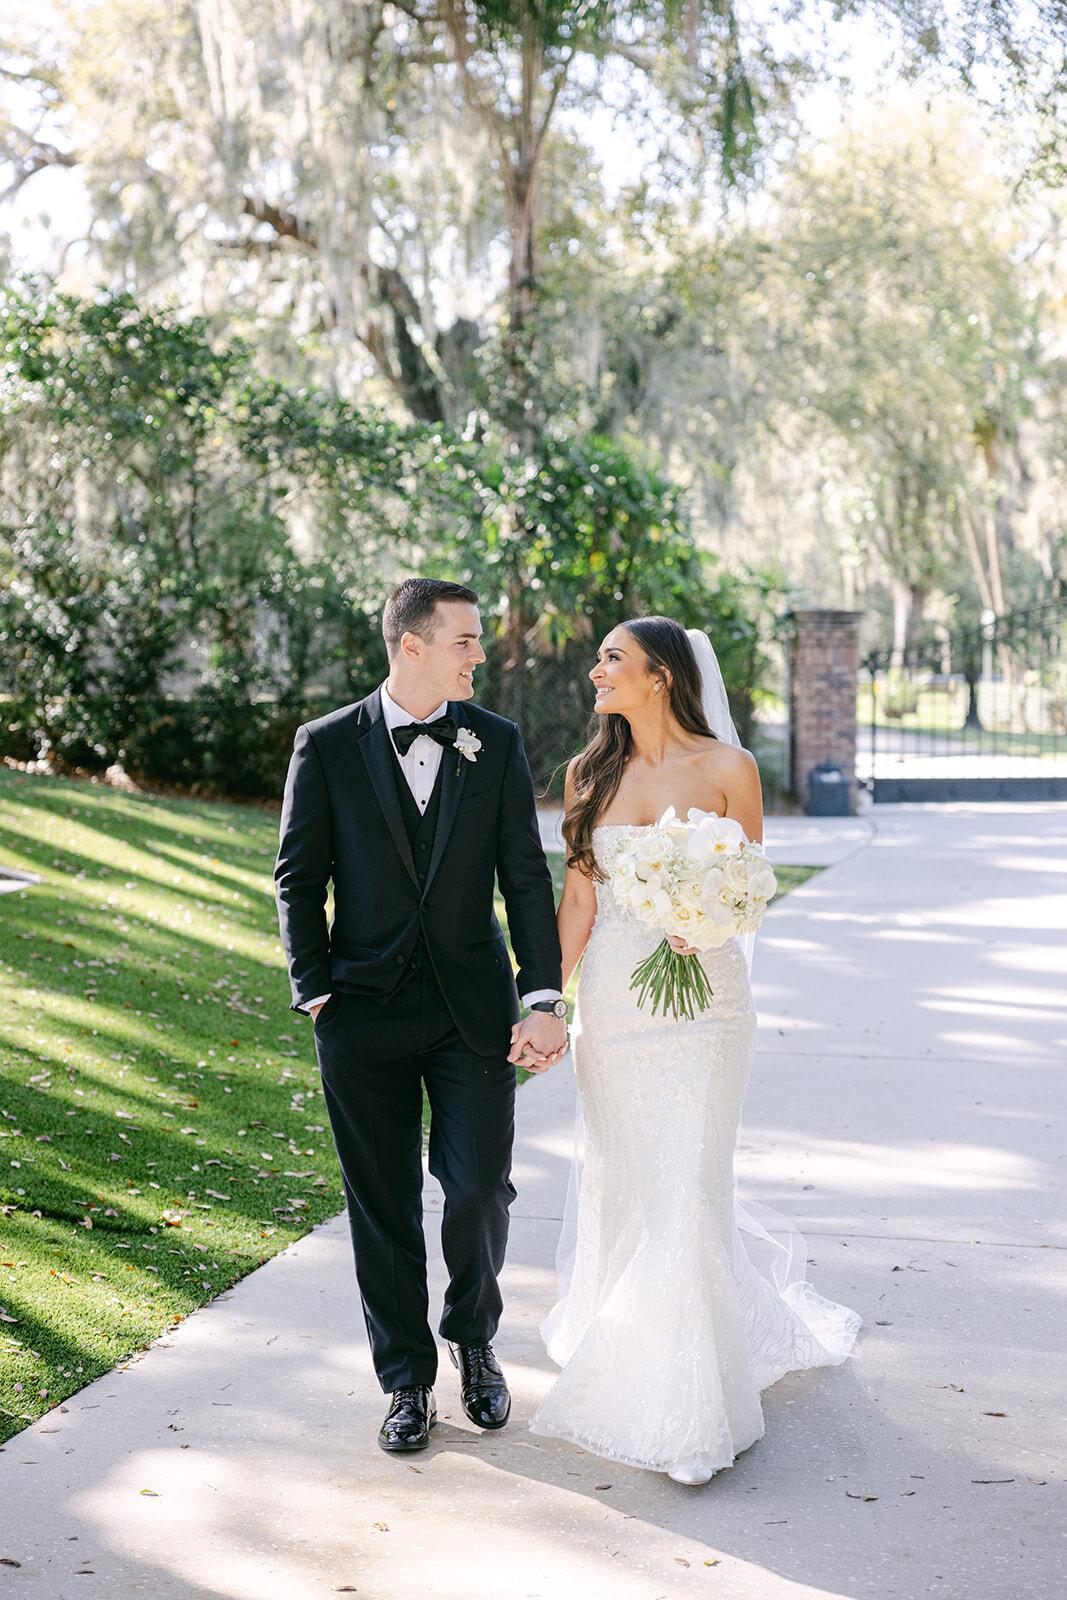 CORNELIA ZAISS PHOTOGRAPHY ASHLYN + RHETT WEDDING SNEAKS 52